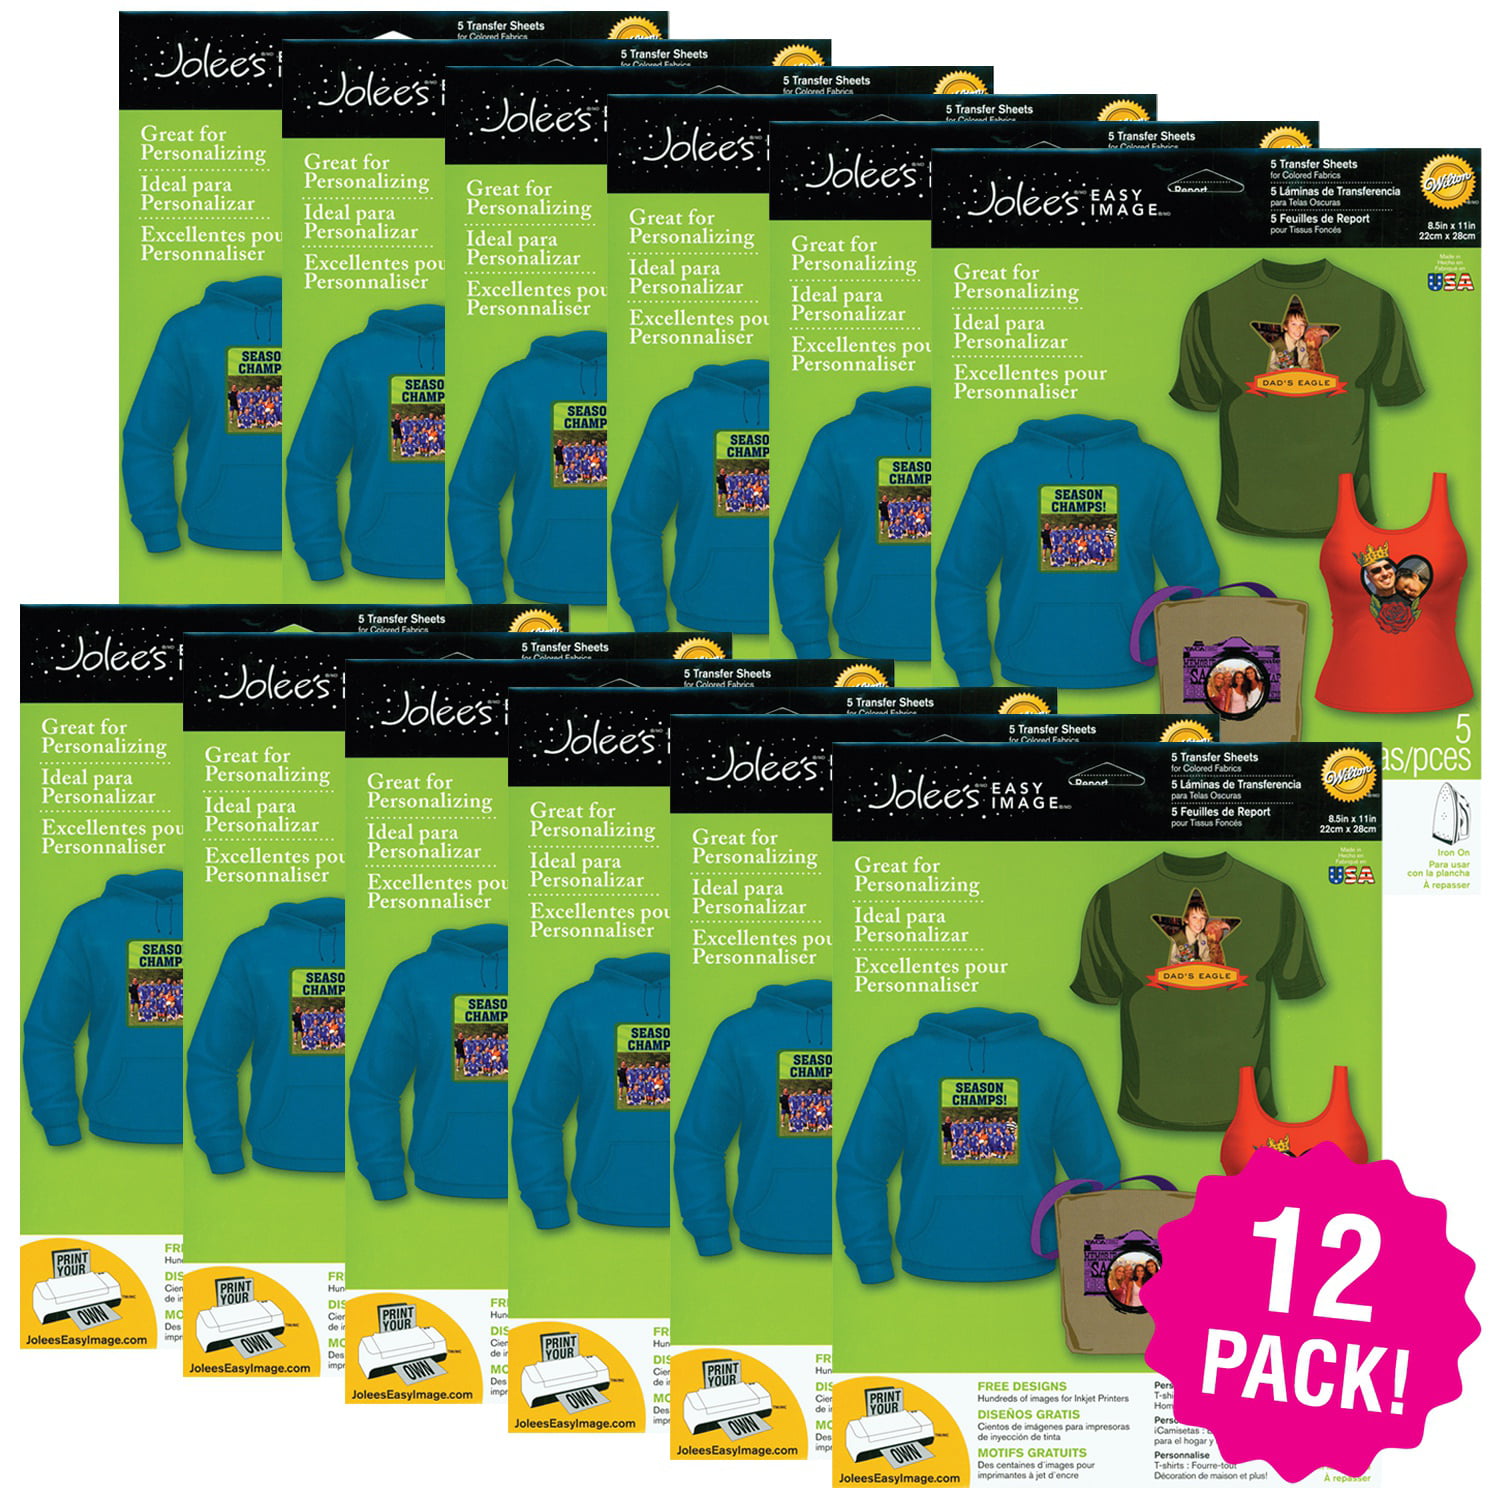 Jolee's Easy Image Transfer Sheets 8.5"X11" 5 Count, Multipack of 12 - Walmart.com - Walmart.com